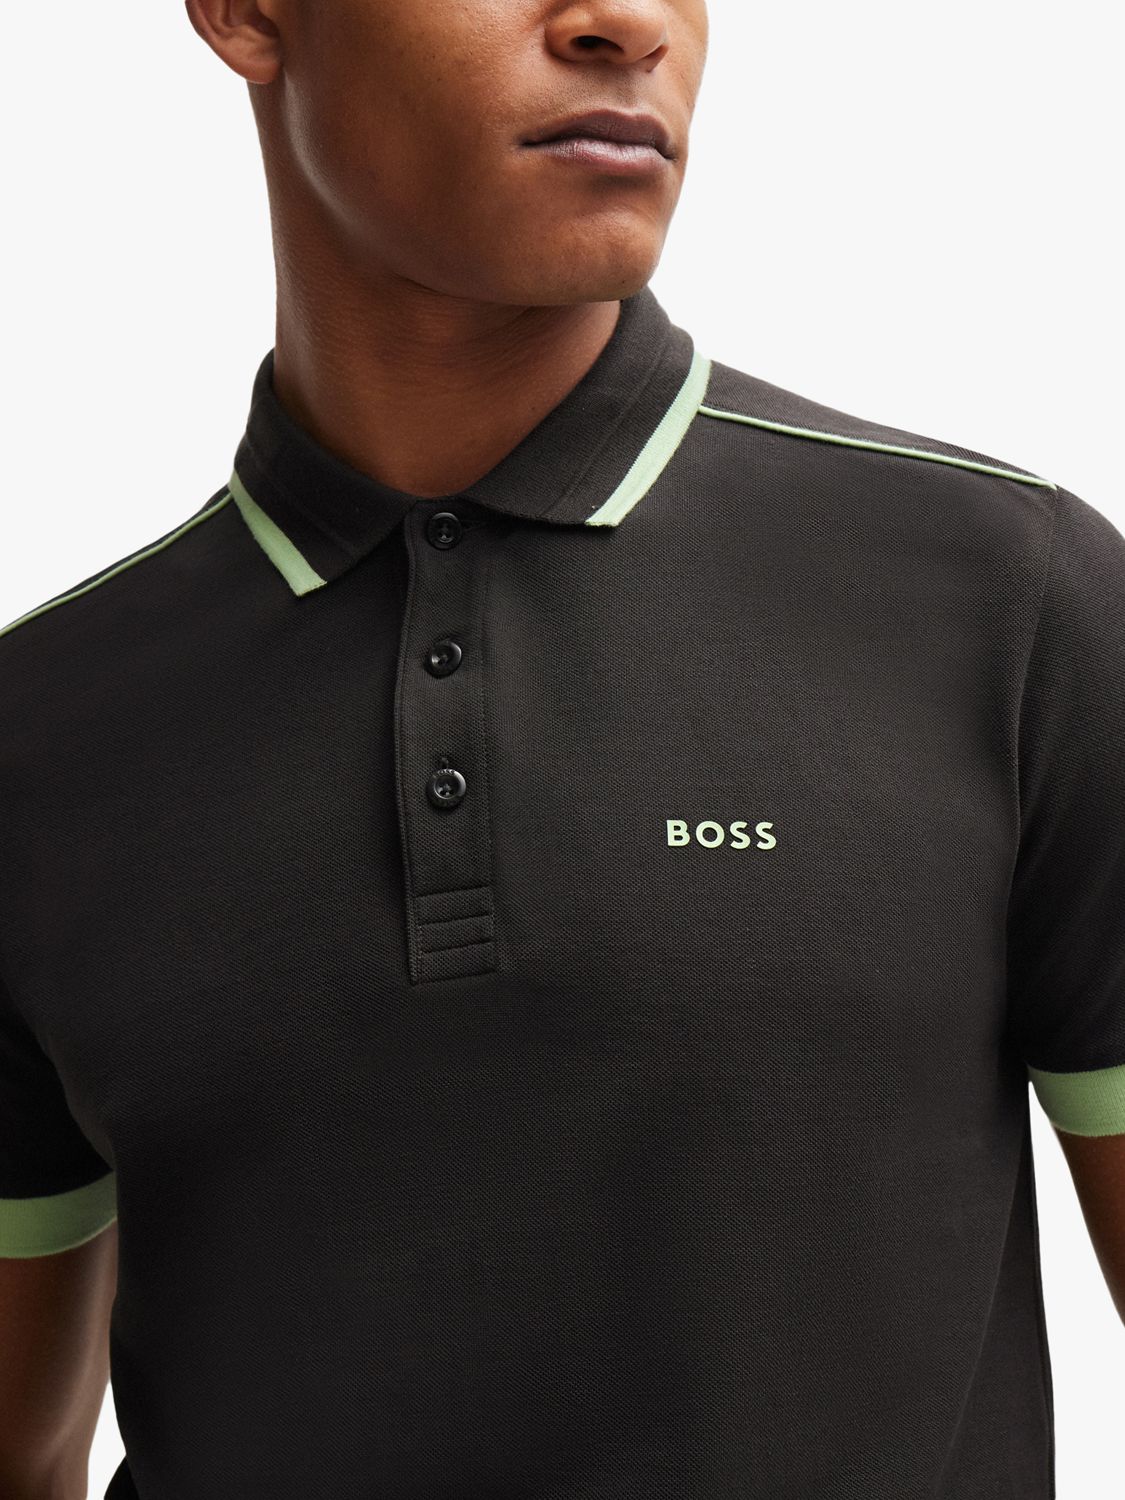 BOSS Paddy 016 Short Sleeve Polo Shirt, Charcoal, S